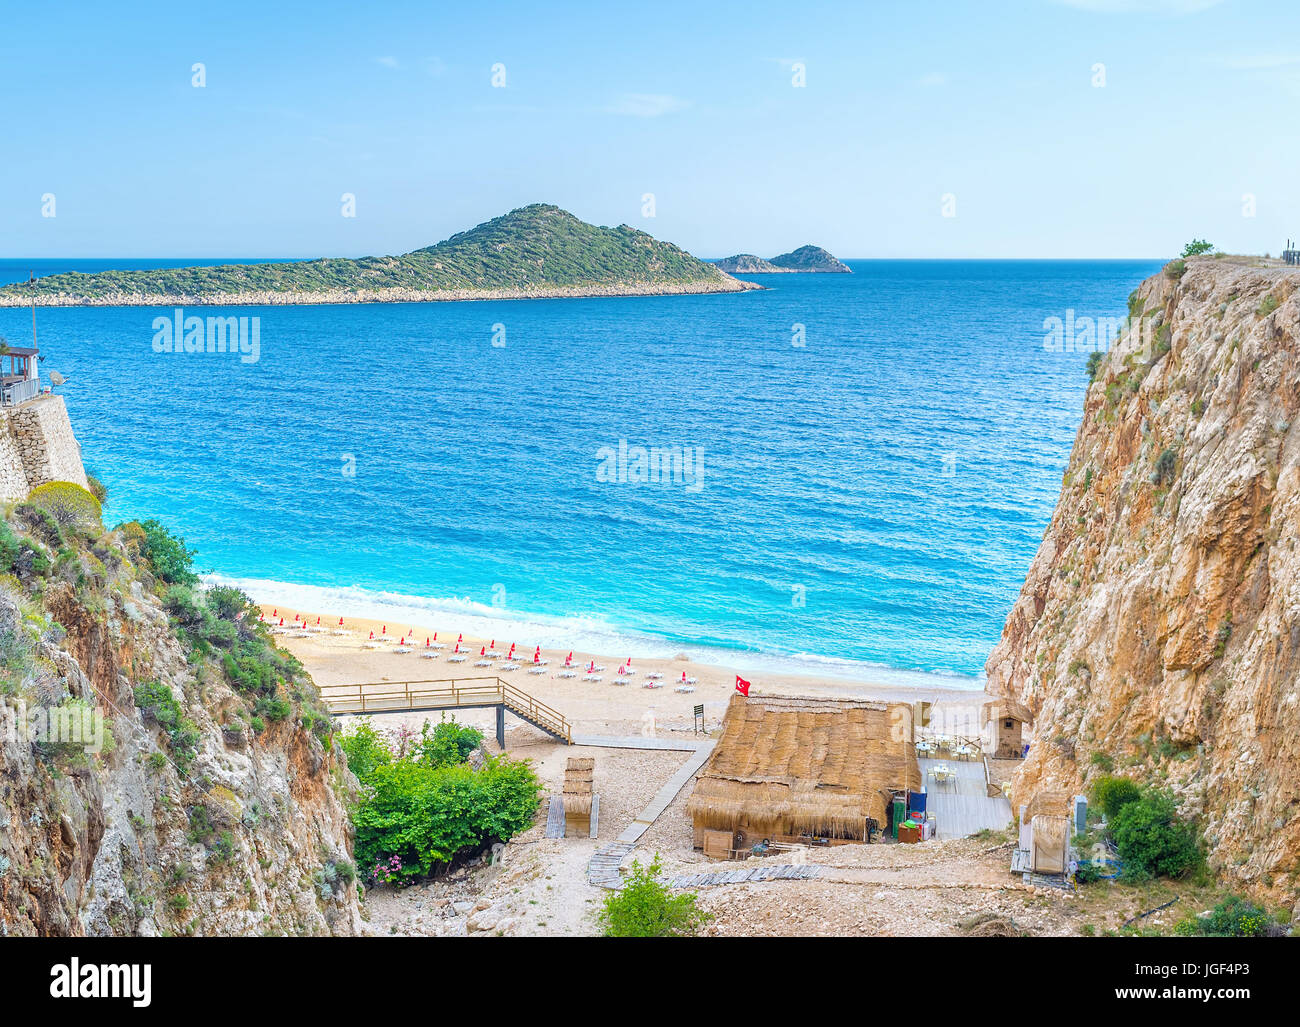 Kaputas beach is one of the most beloved beaches in turkish riviera, Kalkan, Turkey Stock Photo